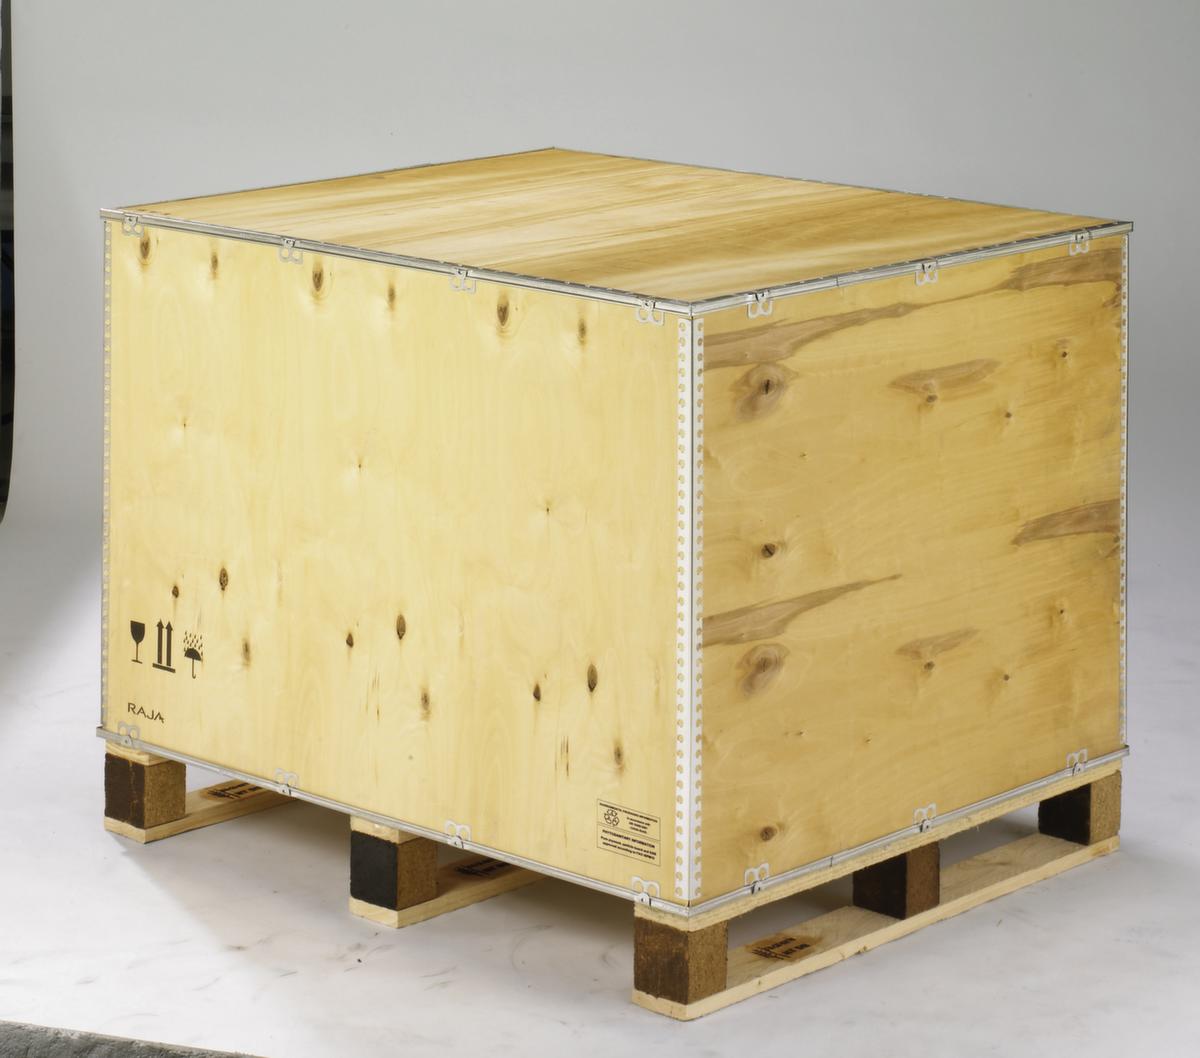 Paletten-Faltbox aus Sperrholz Standard 1 ZOOM